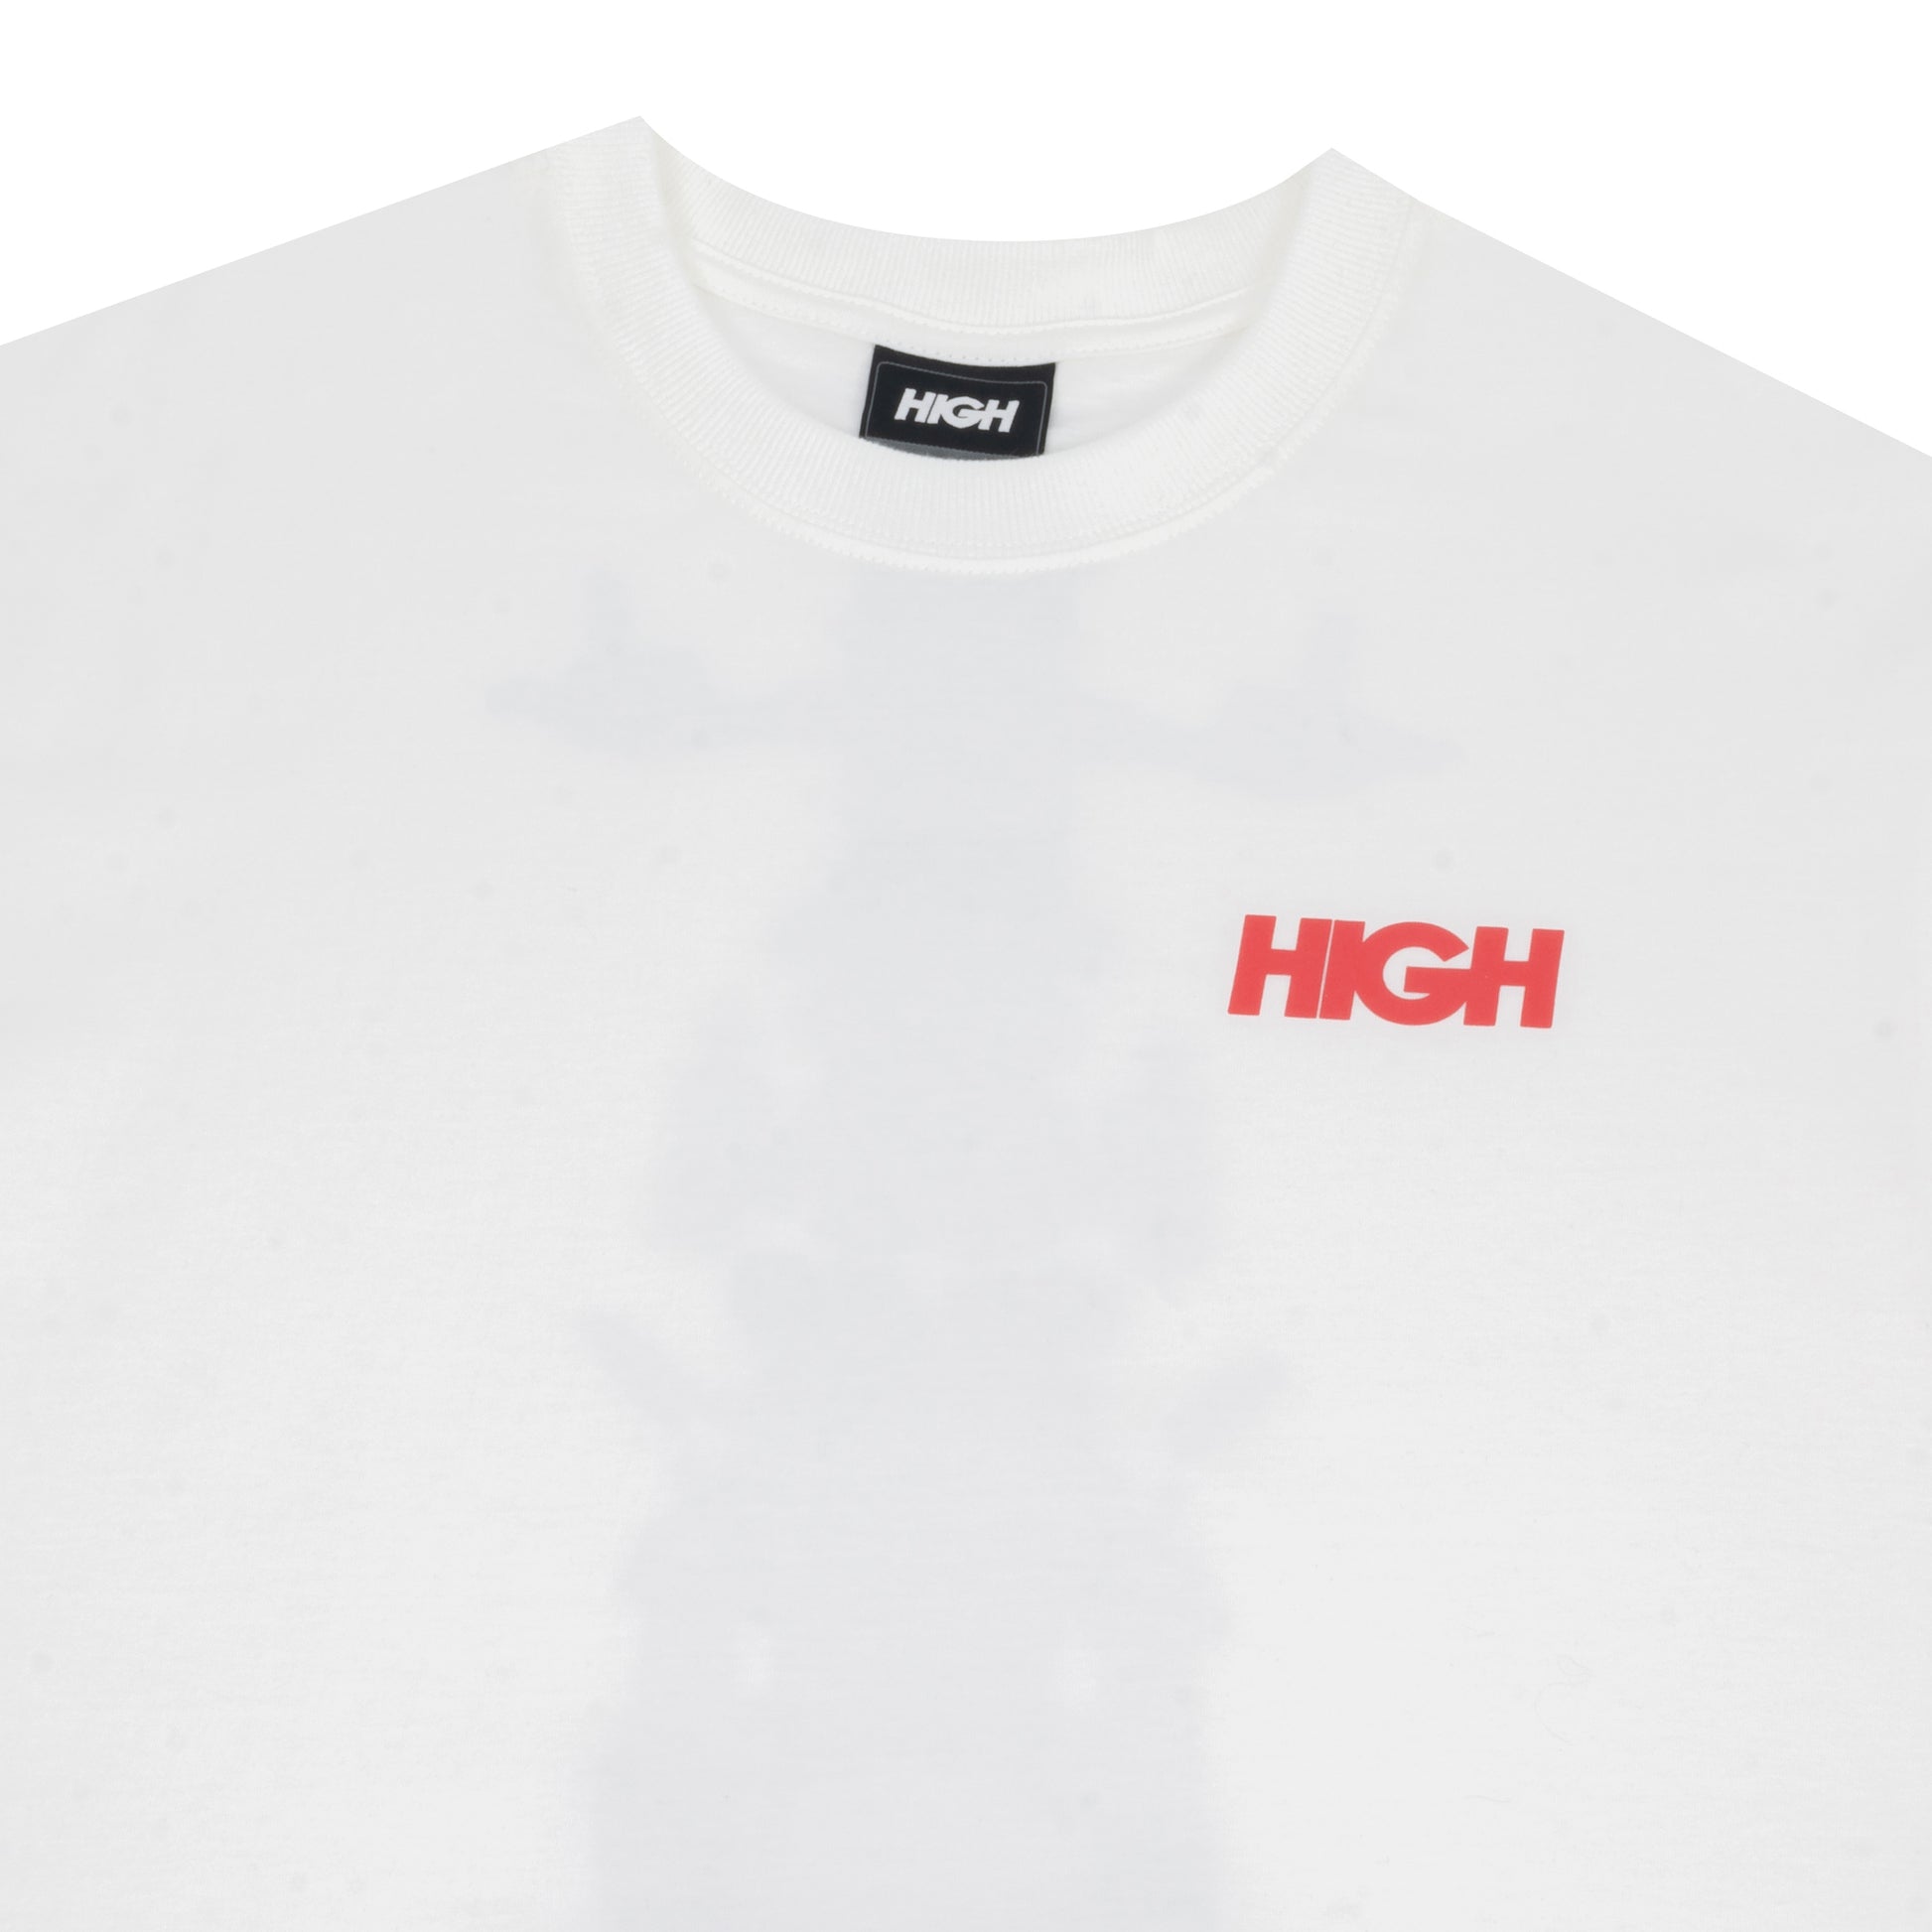 HIGH - Camiseta Totem "White" - THE GAME